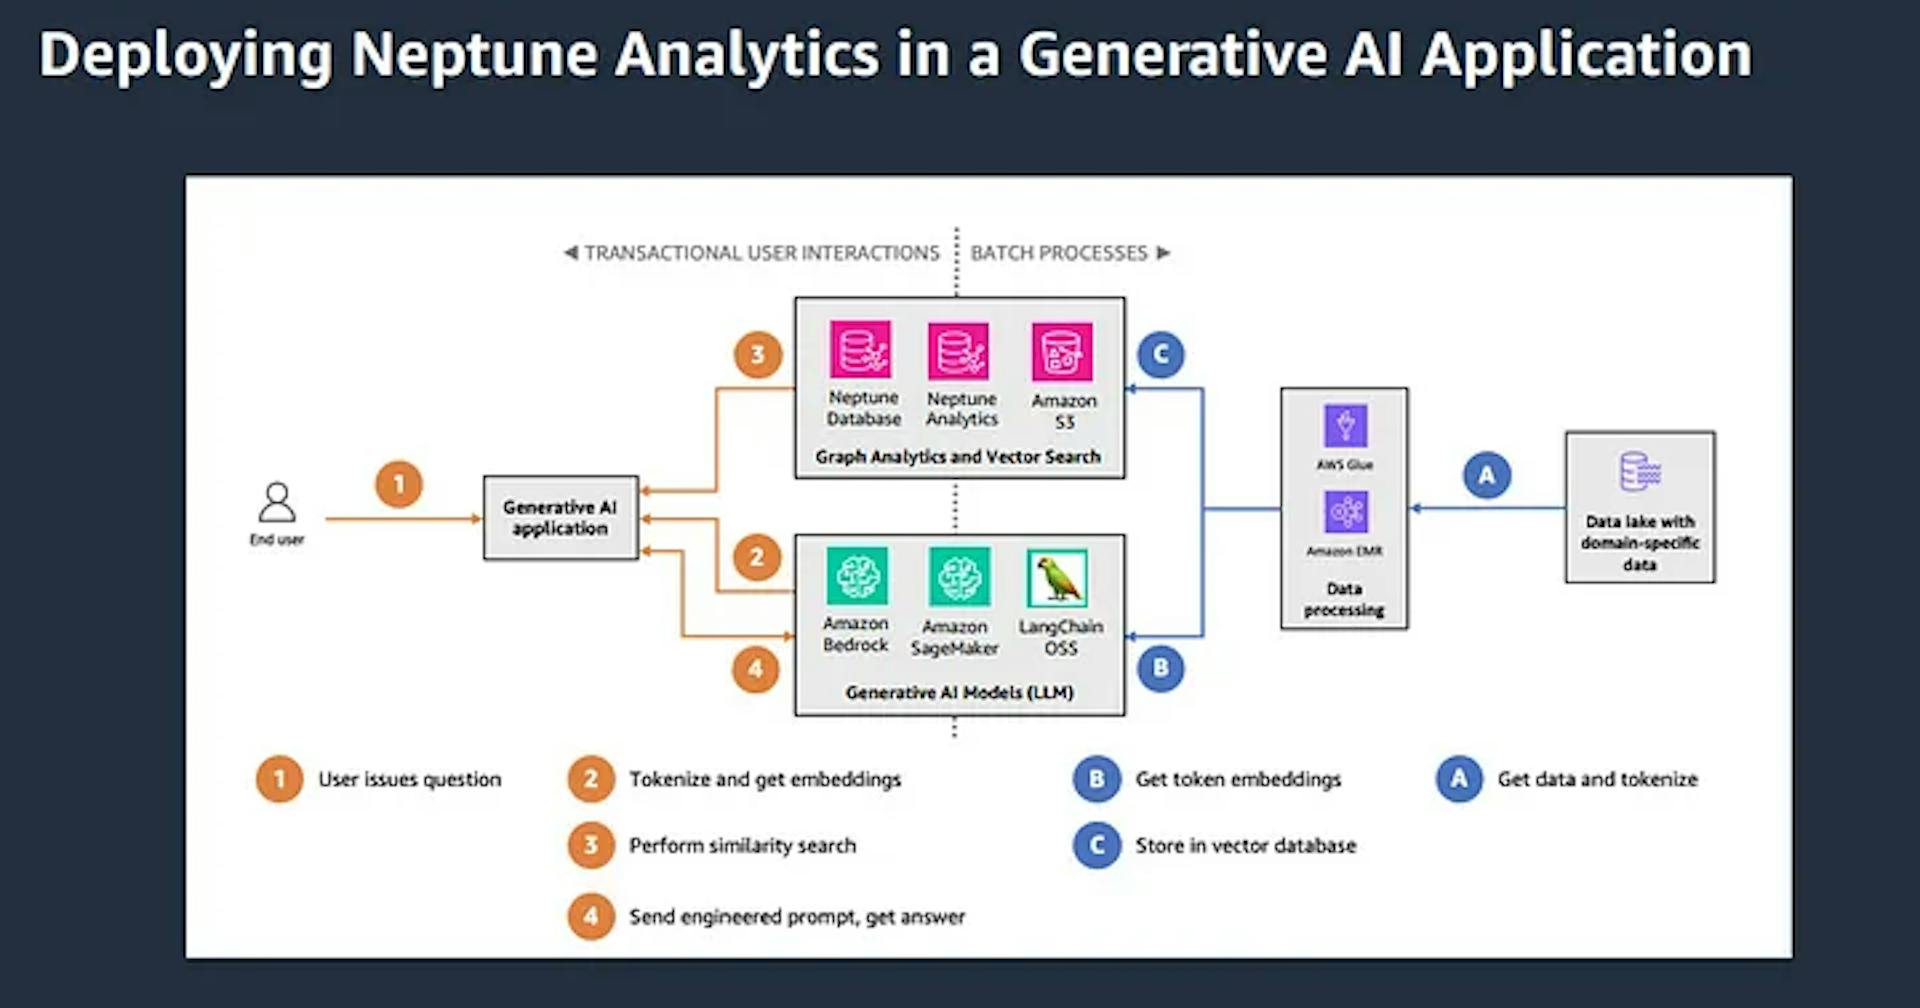 Amazon Neptune Analytics brings Generative AI integration.